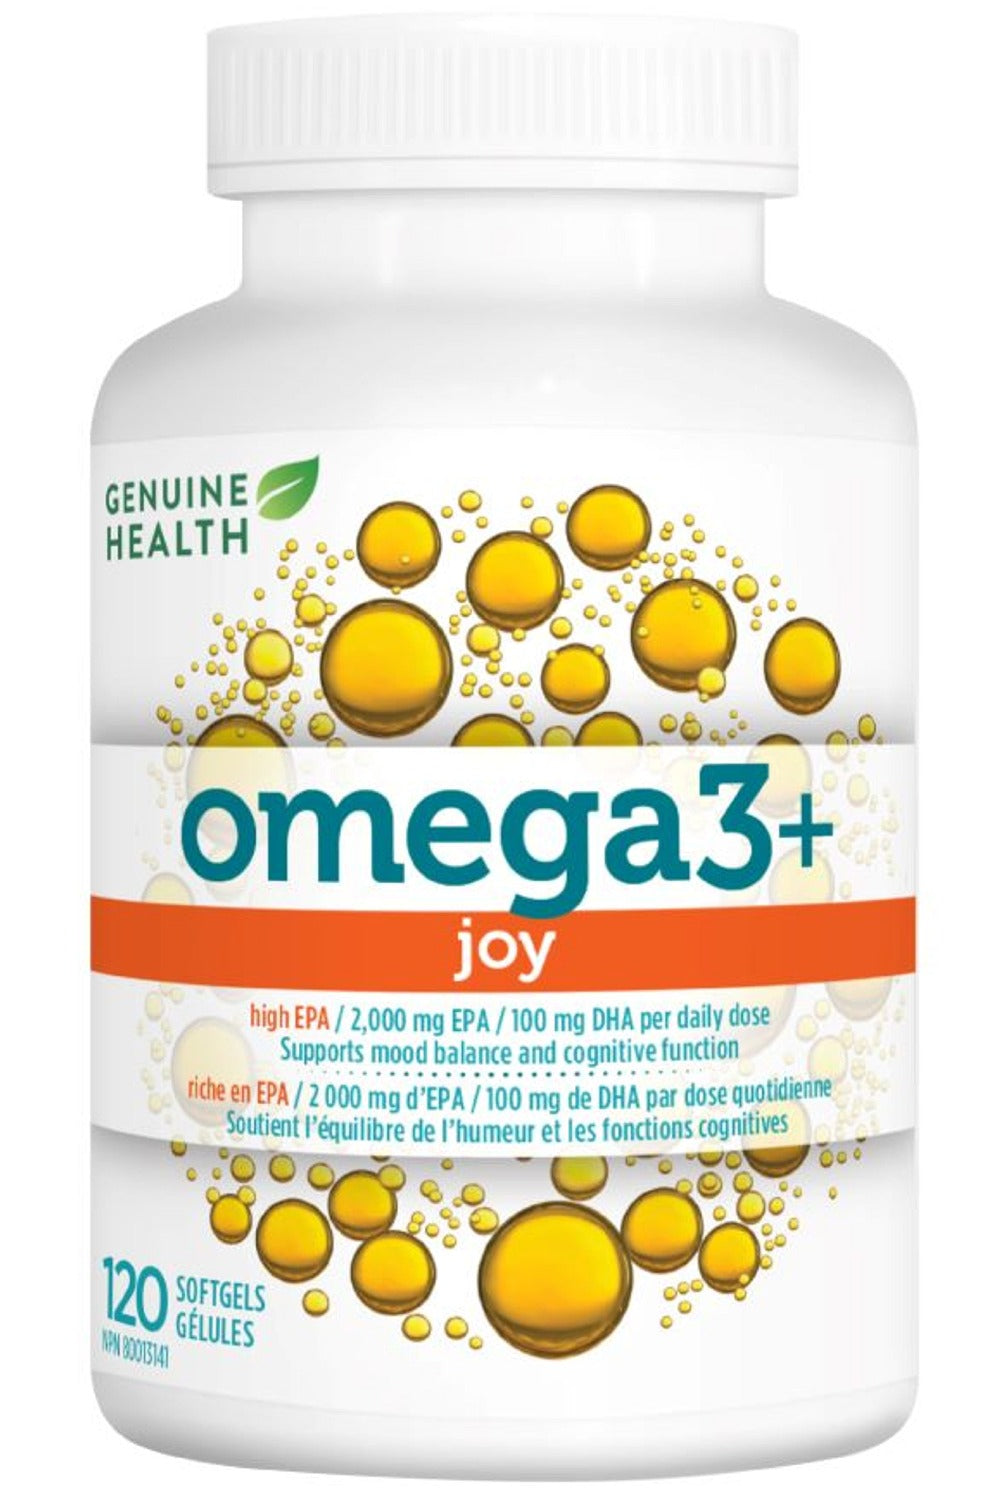 GENUINE HEALTH Omega3+ JOY (120 softgels)